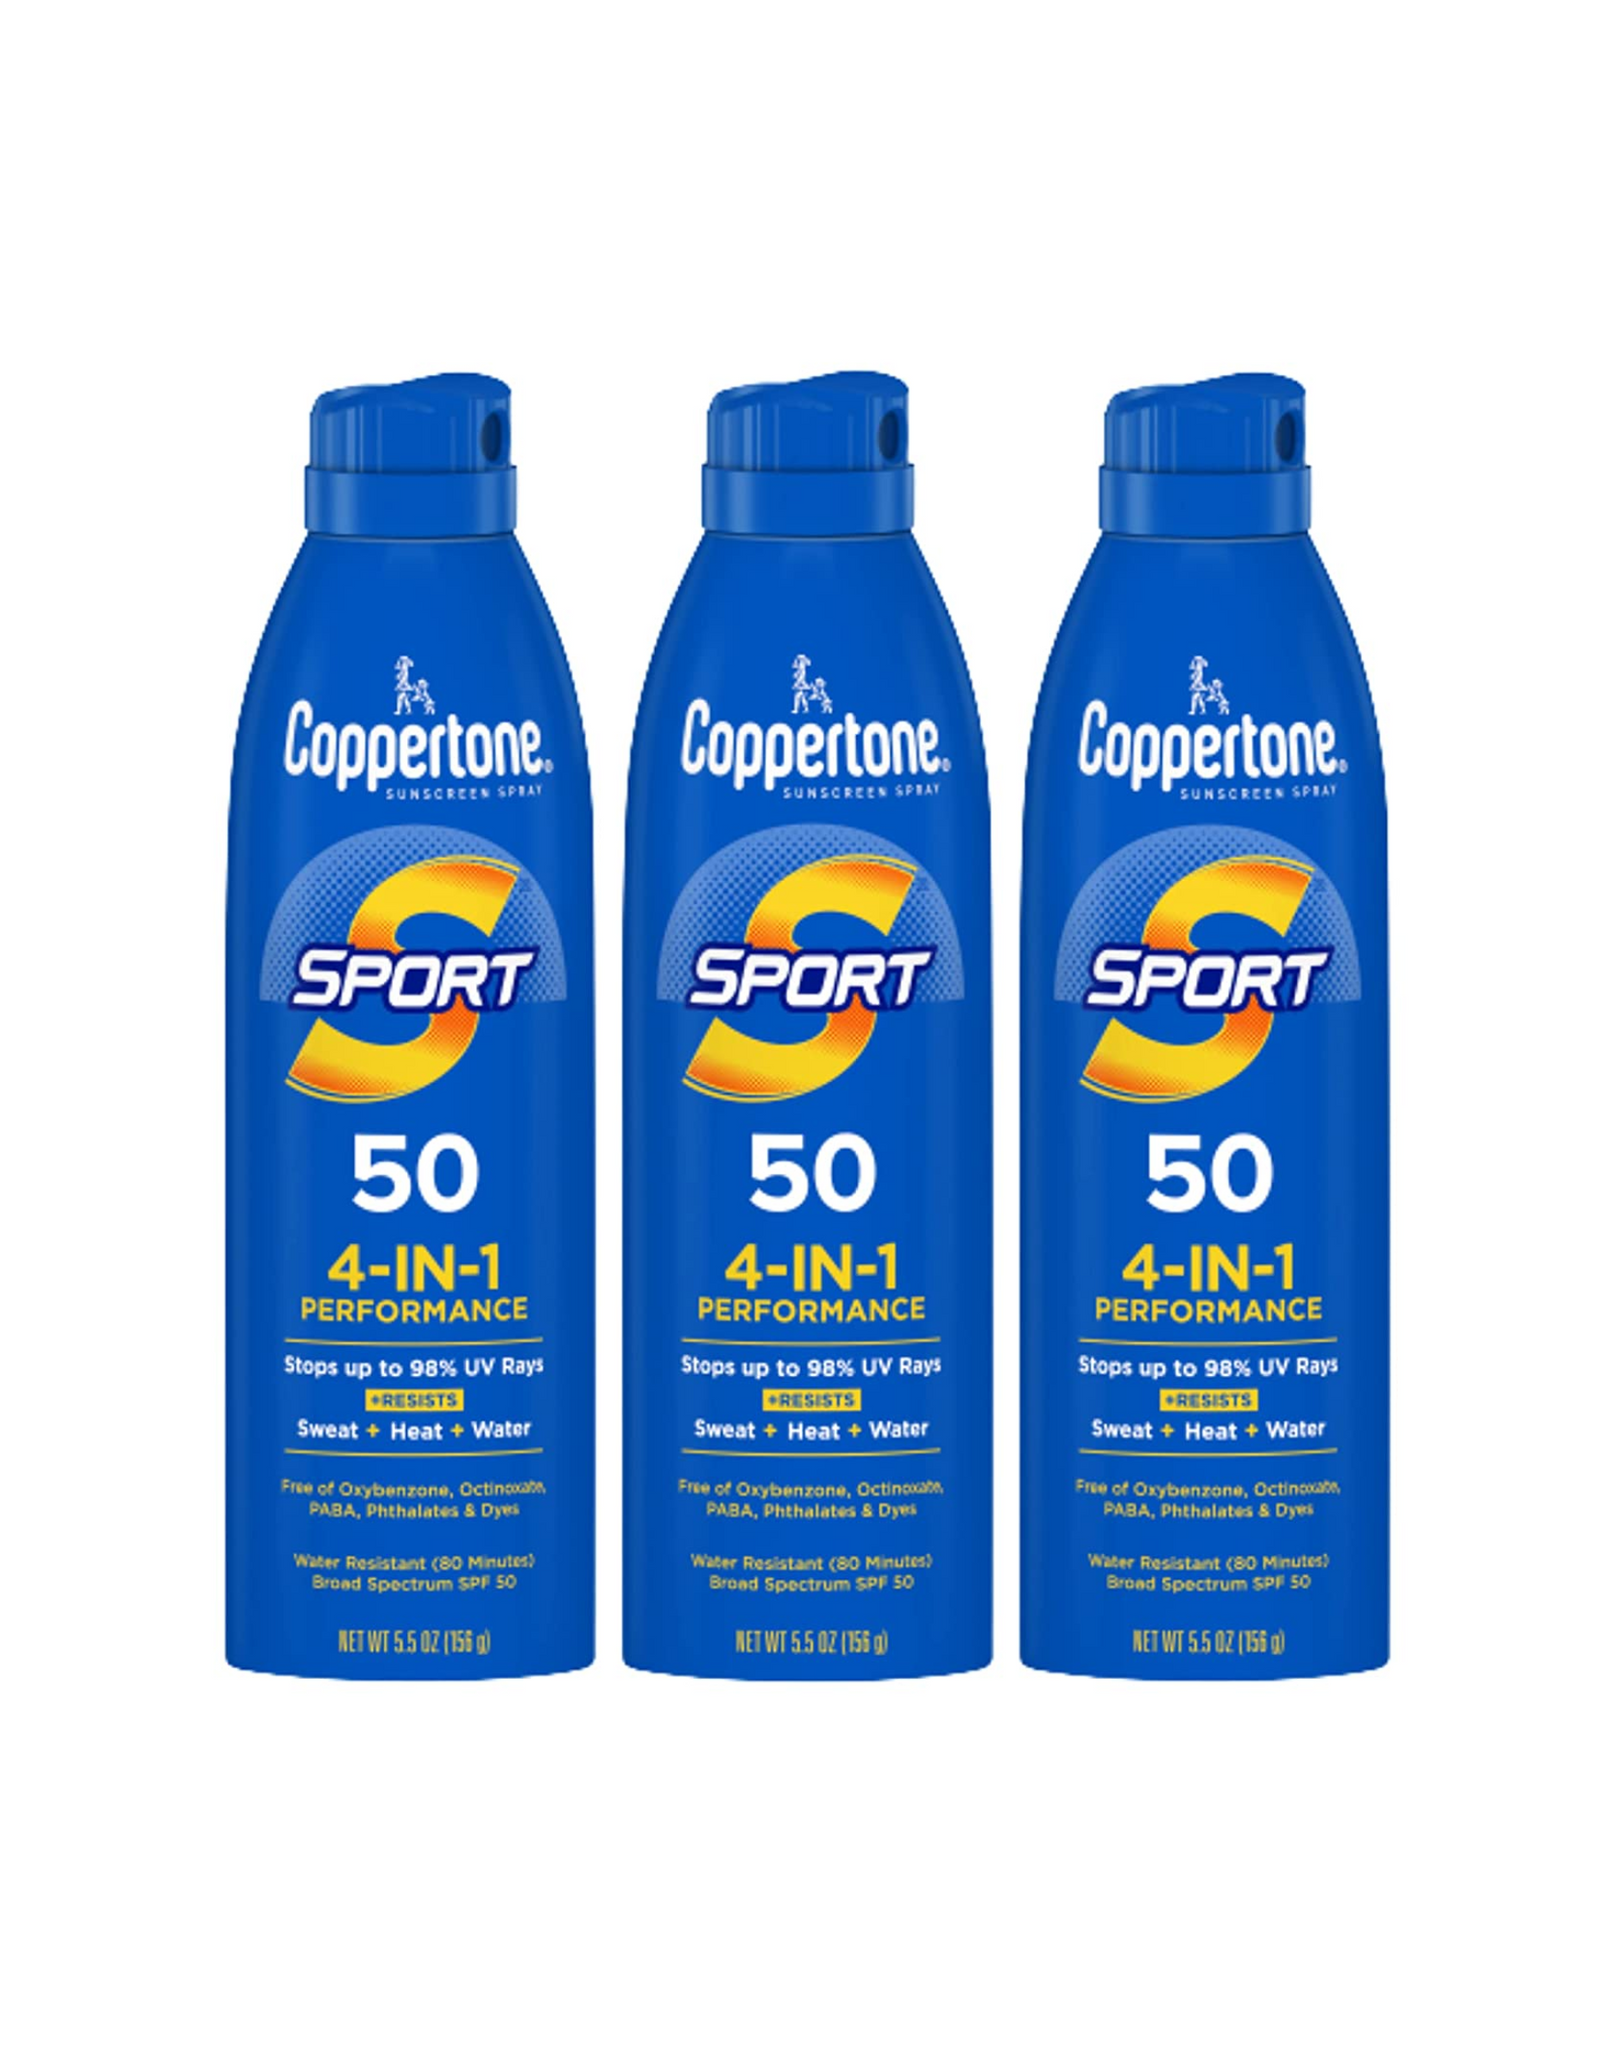 Coppertone SPORT Sunscreen Spray SPF 50, 5.5 oz (Pack of 3)